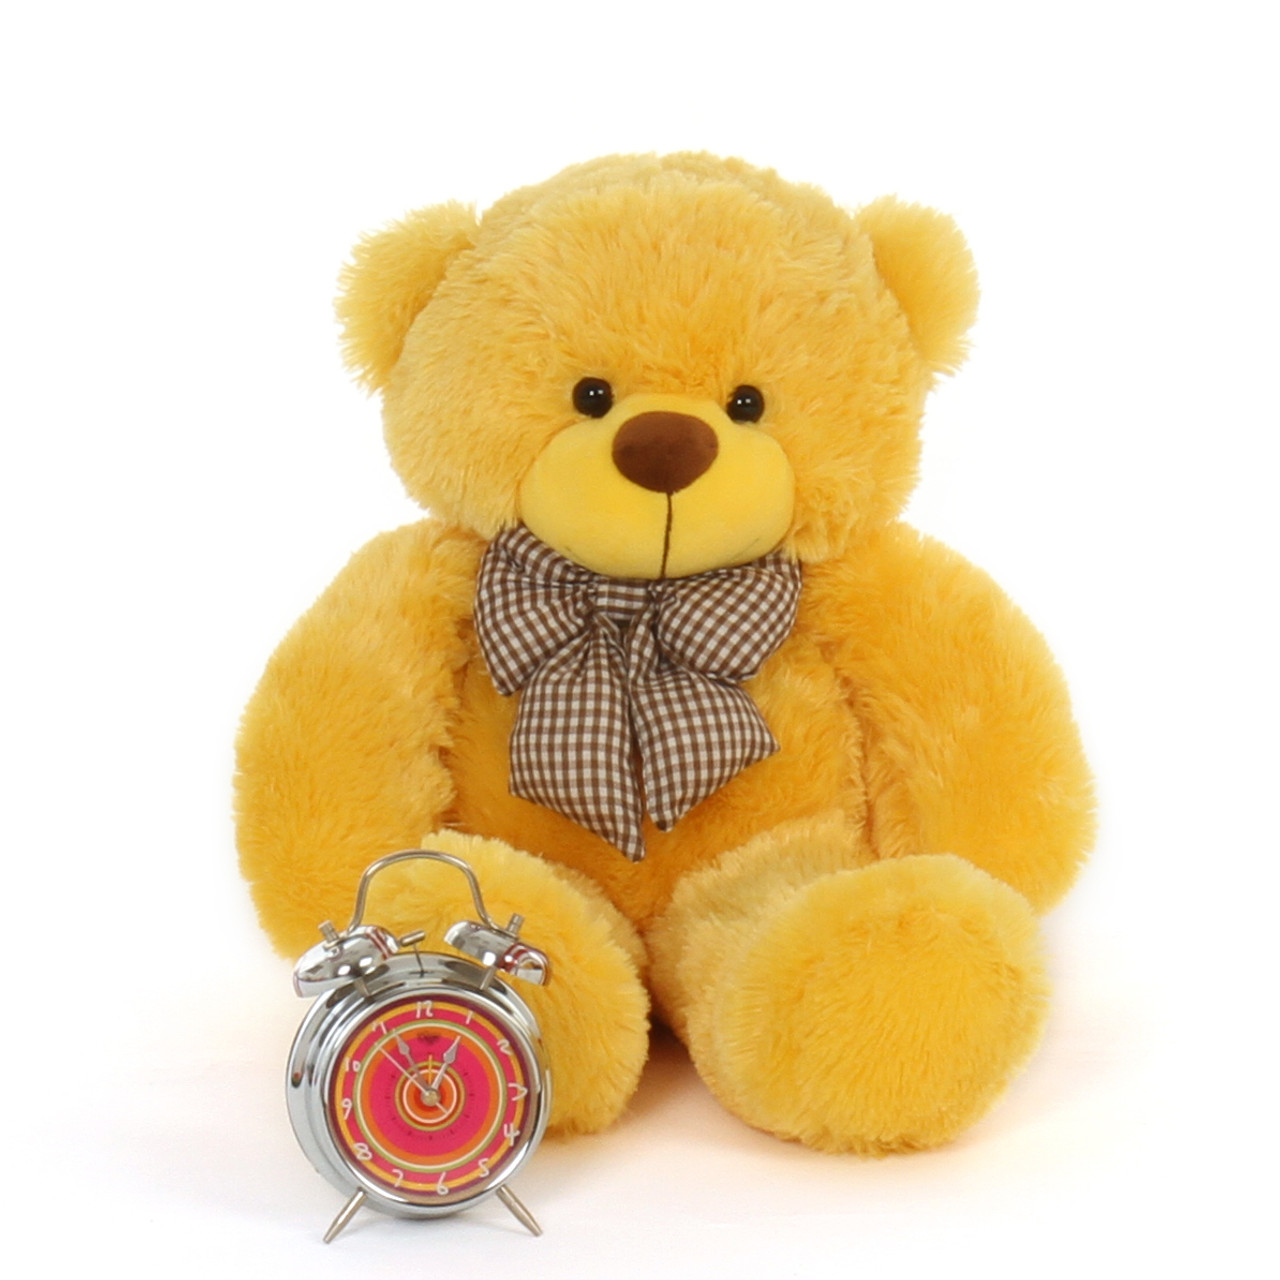 Download 2ft Big Adorable Huggable Yellow Teddy Bear Daisy Cuddles